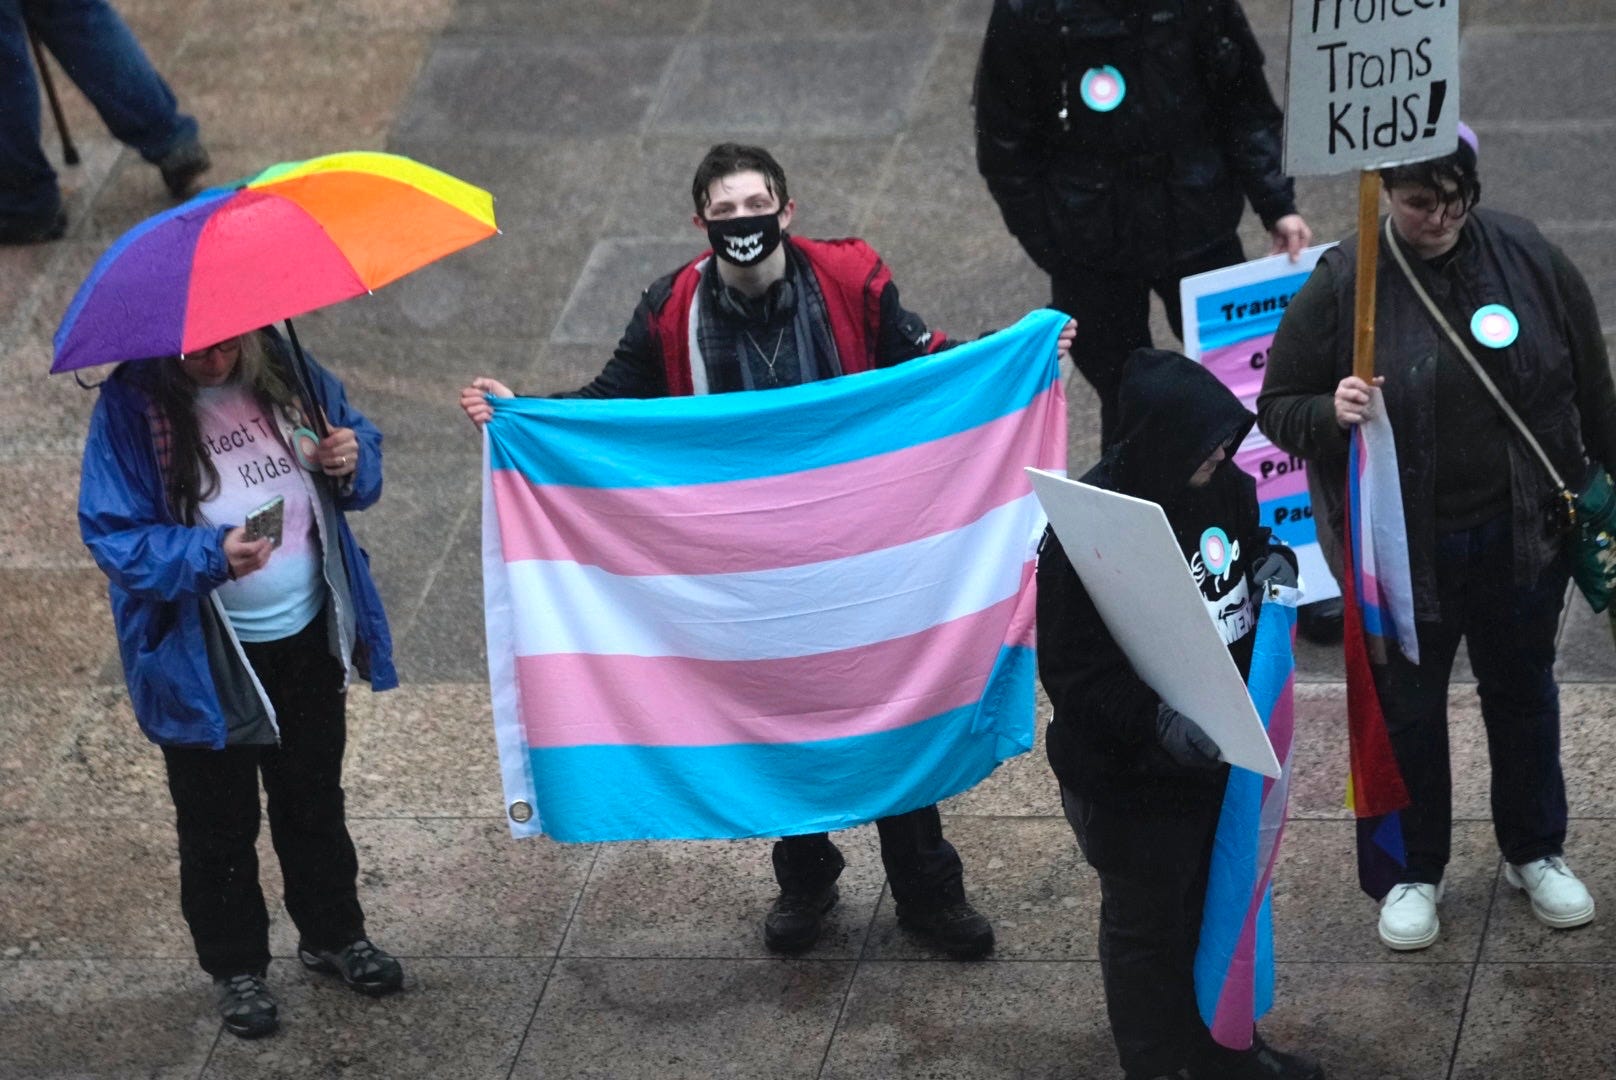 ohio judge blocks ban on gender-affirming care for transgender minors—for now